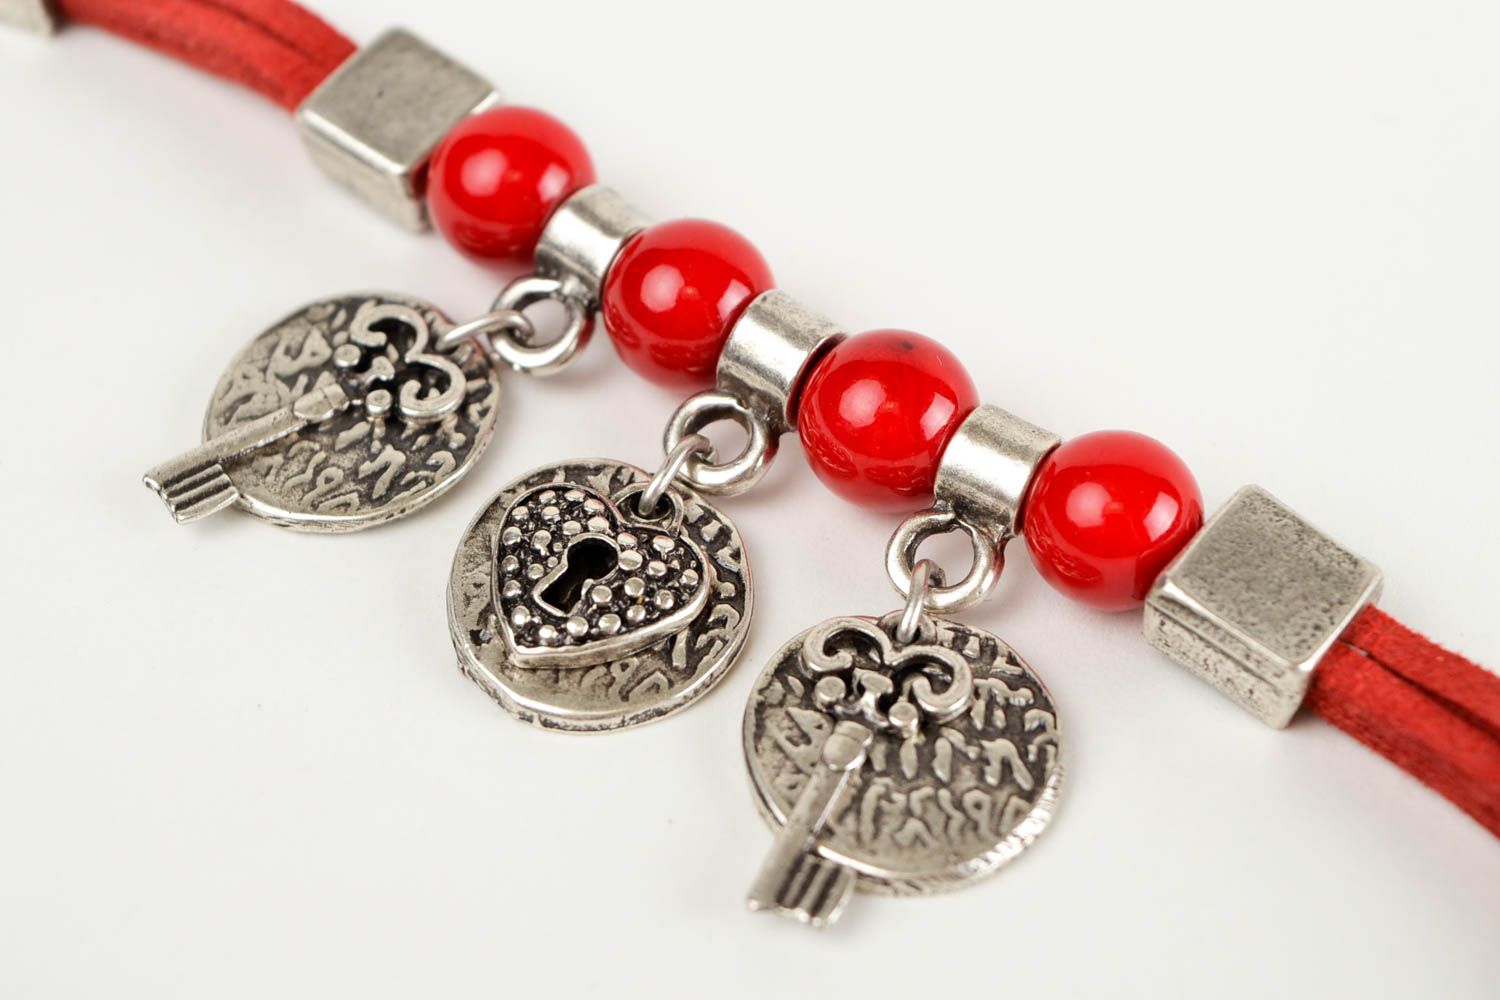 Unusual handmade metal bracelet cool jewelry designs metal craft ideas photo 3